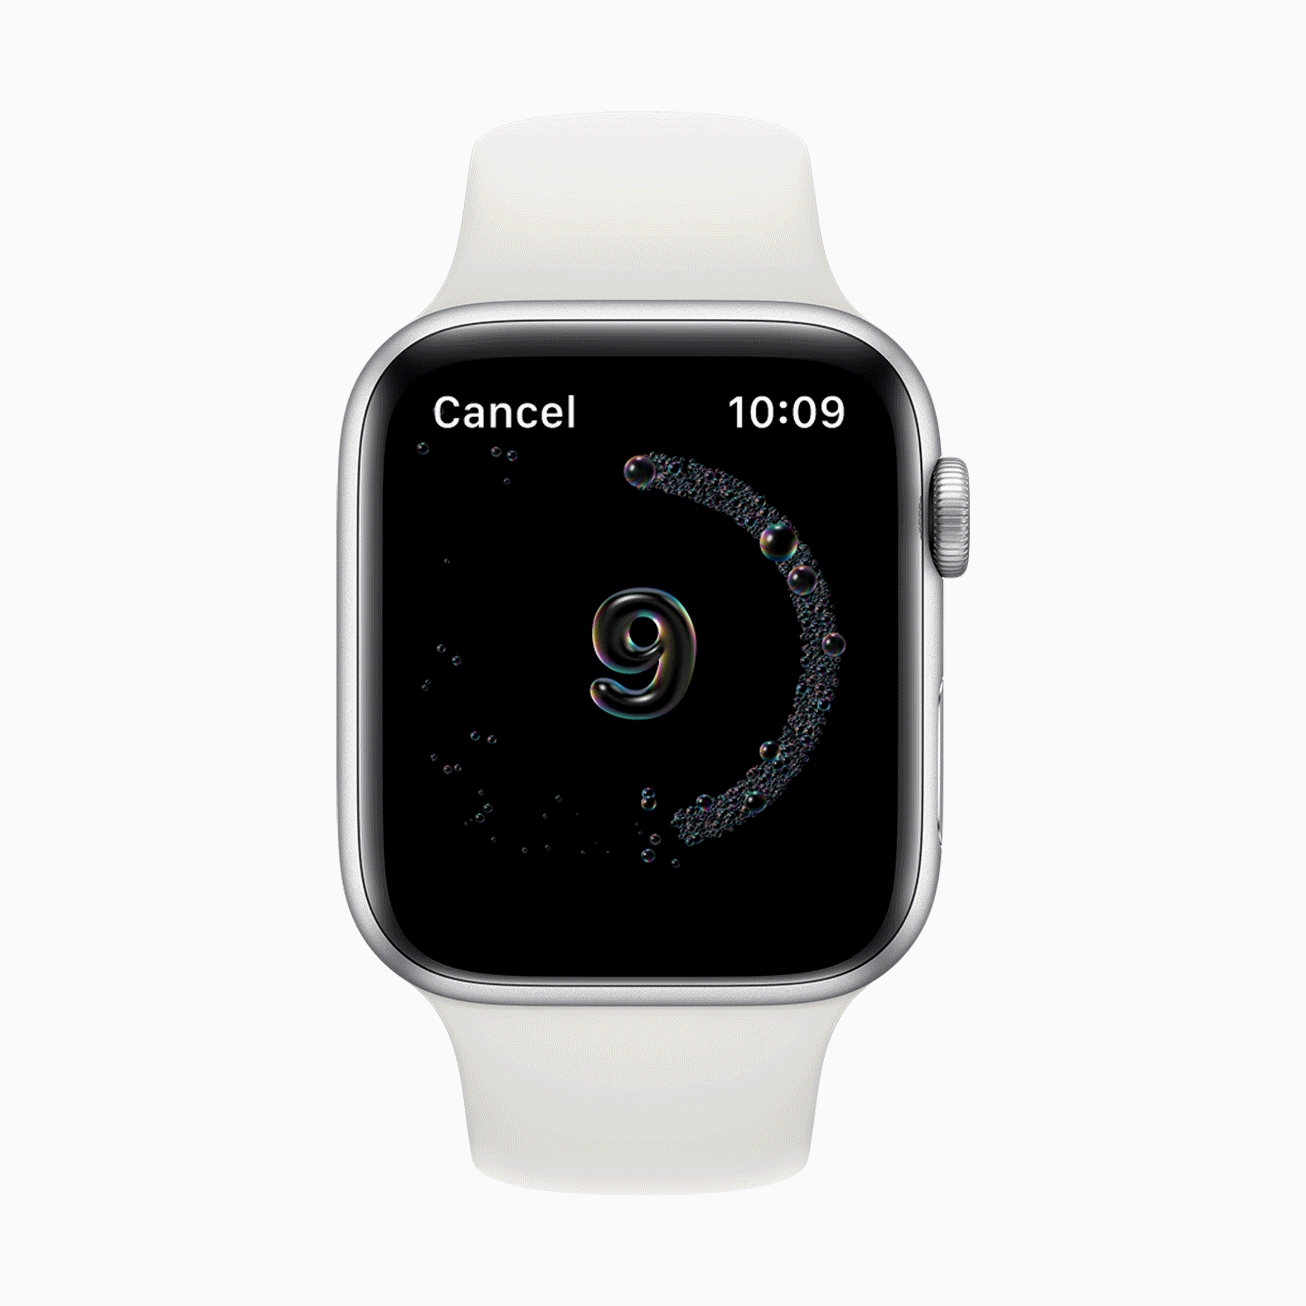 Apple-Watch-watchOS7_handwashing-screen_06222020